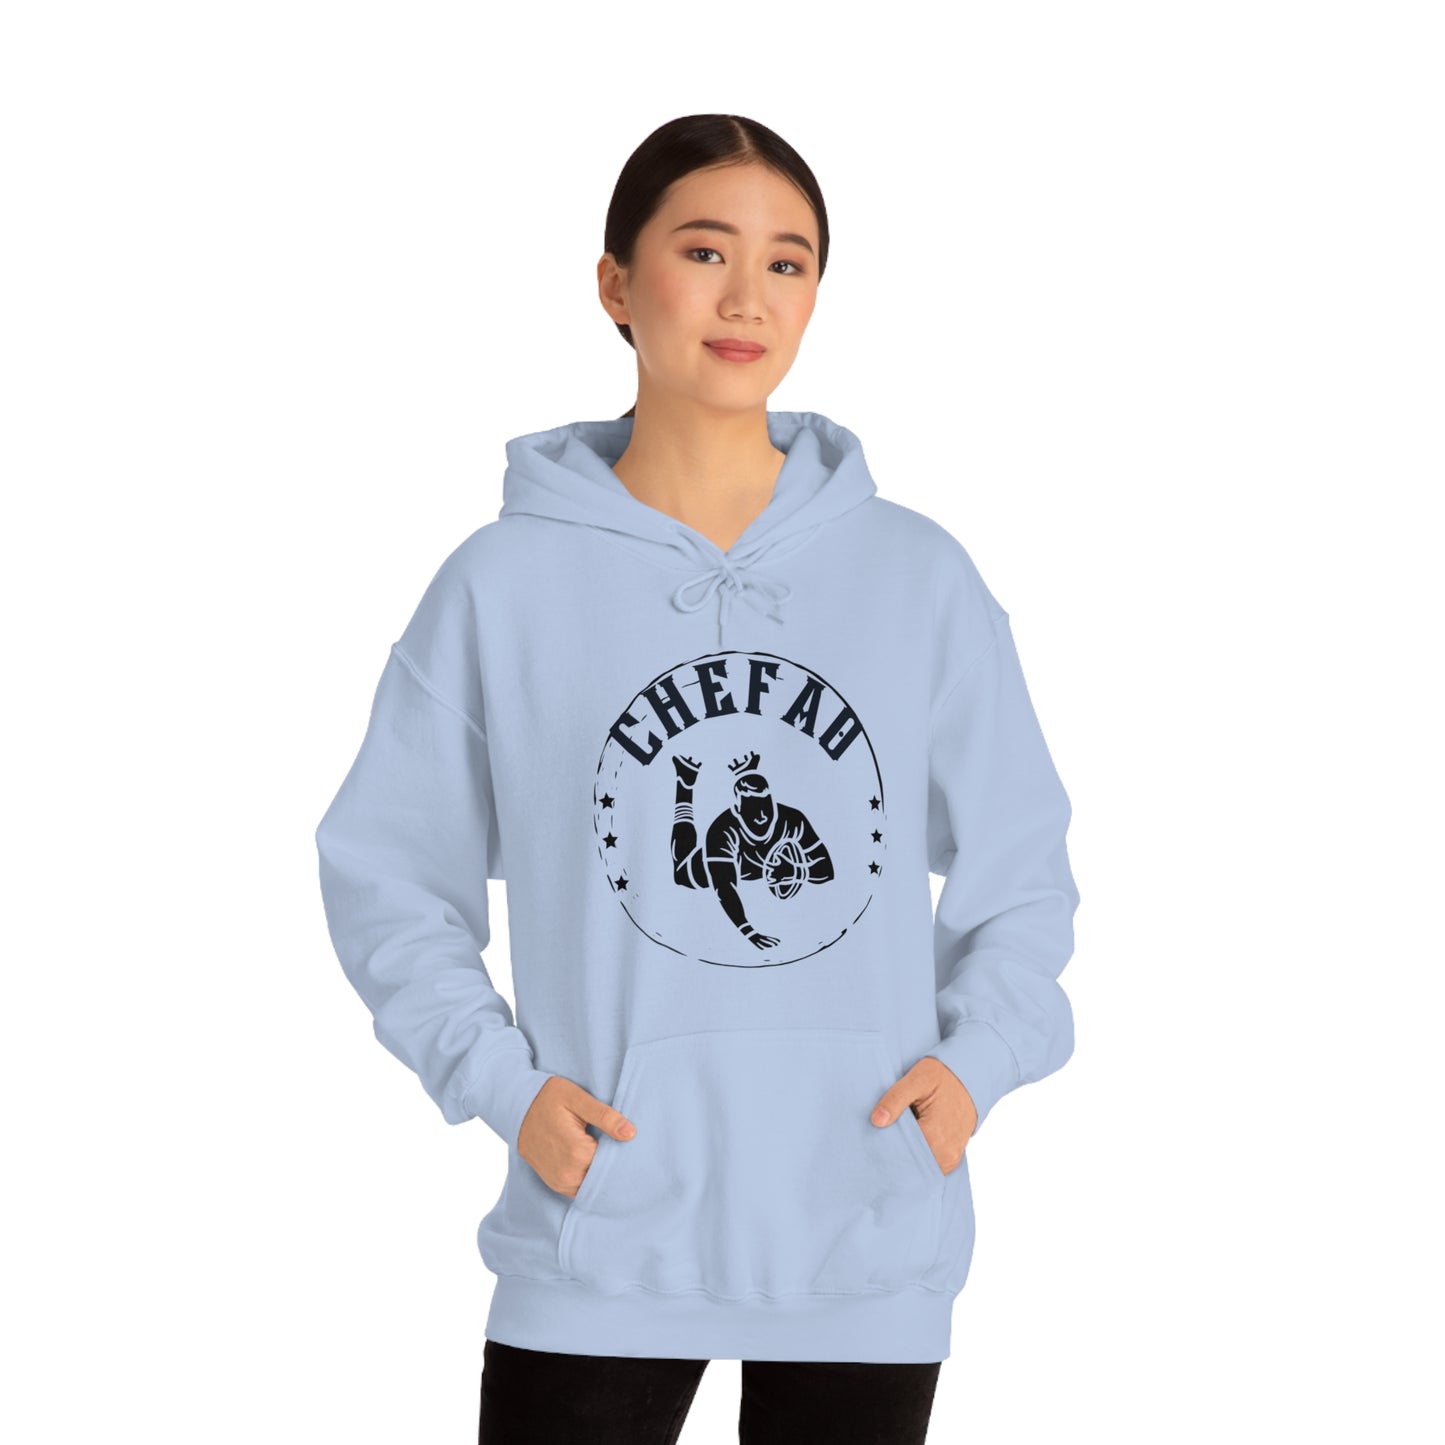 Chefao Rugby I, Unisex Heavy Blend Hooded Sweatshirt